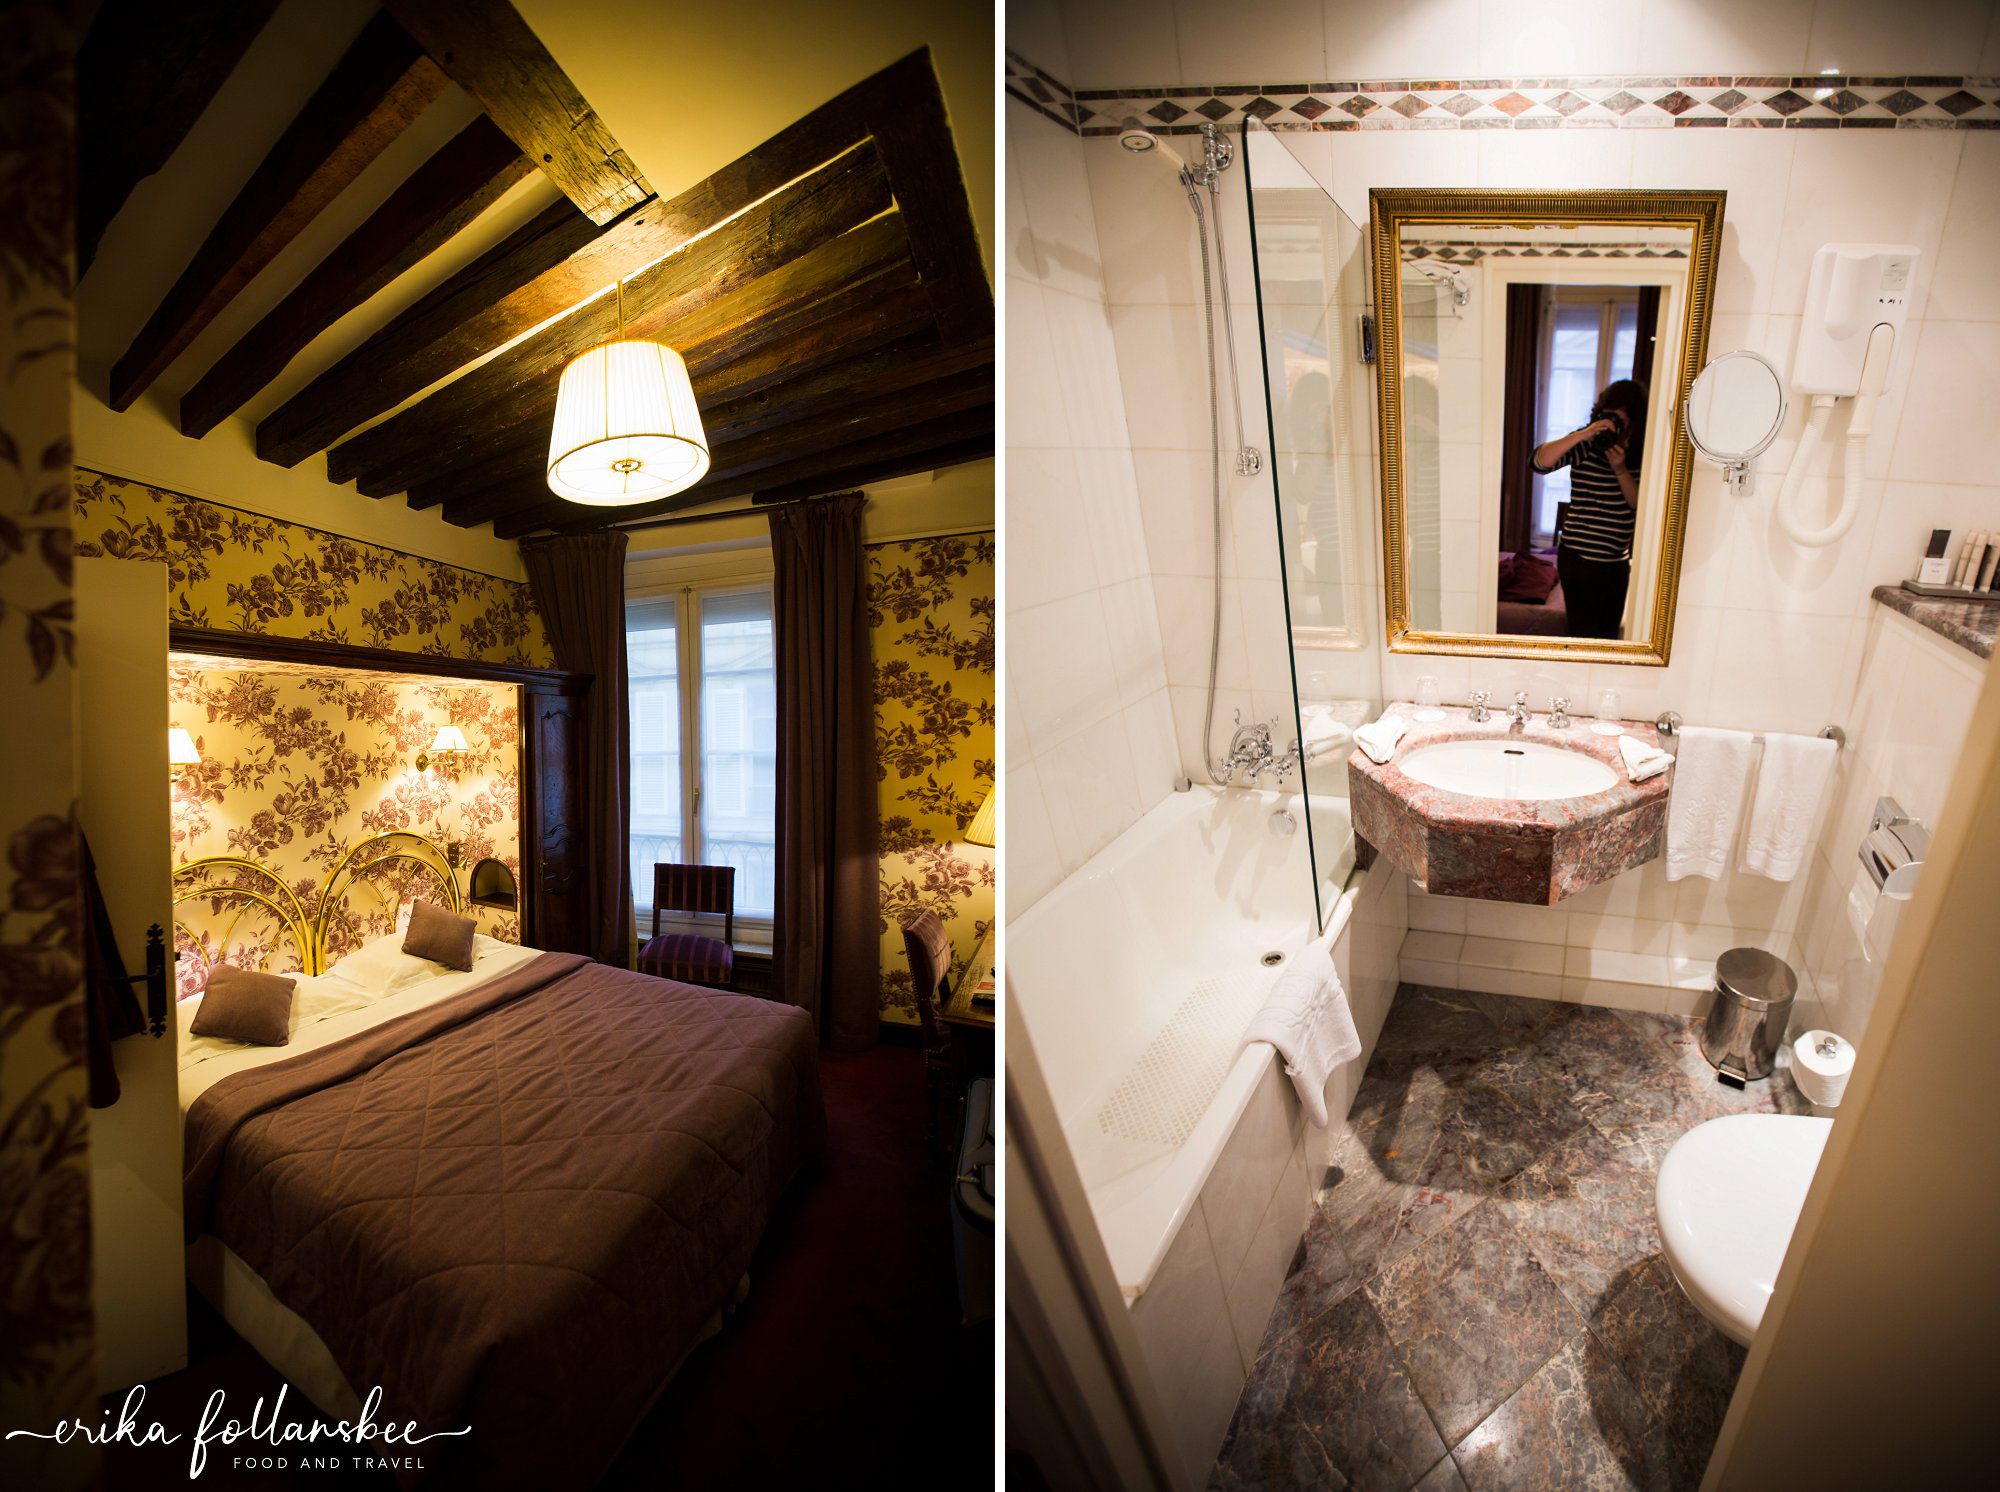 Hotel Saint Germain des Pres double room #24 and bathroom